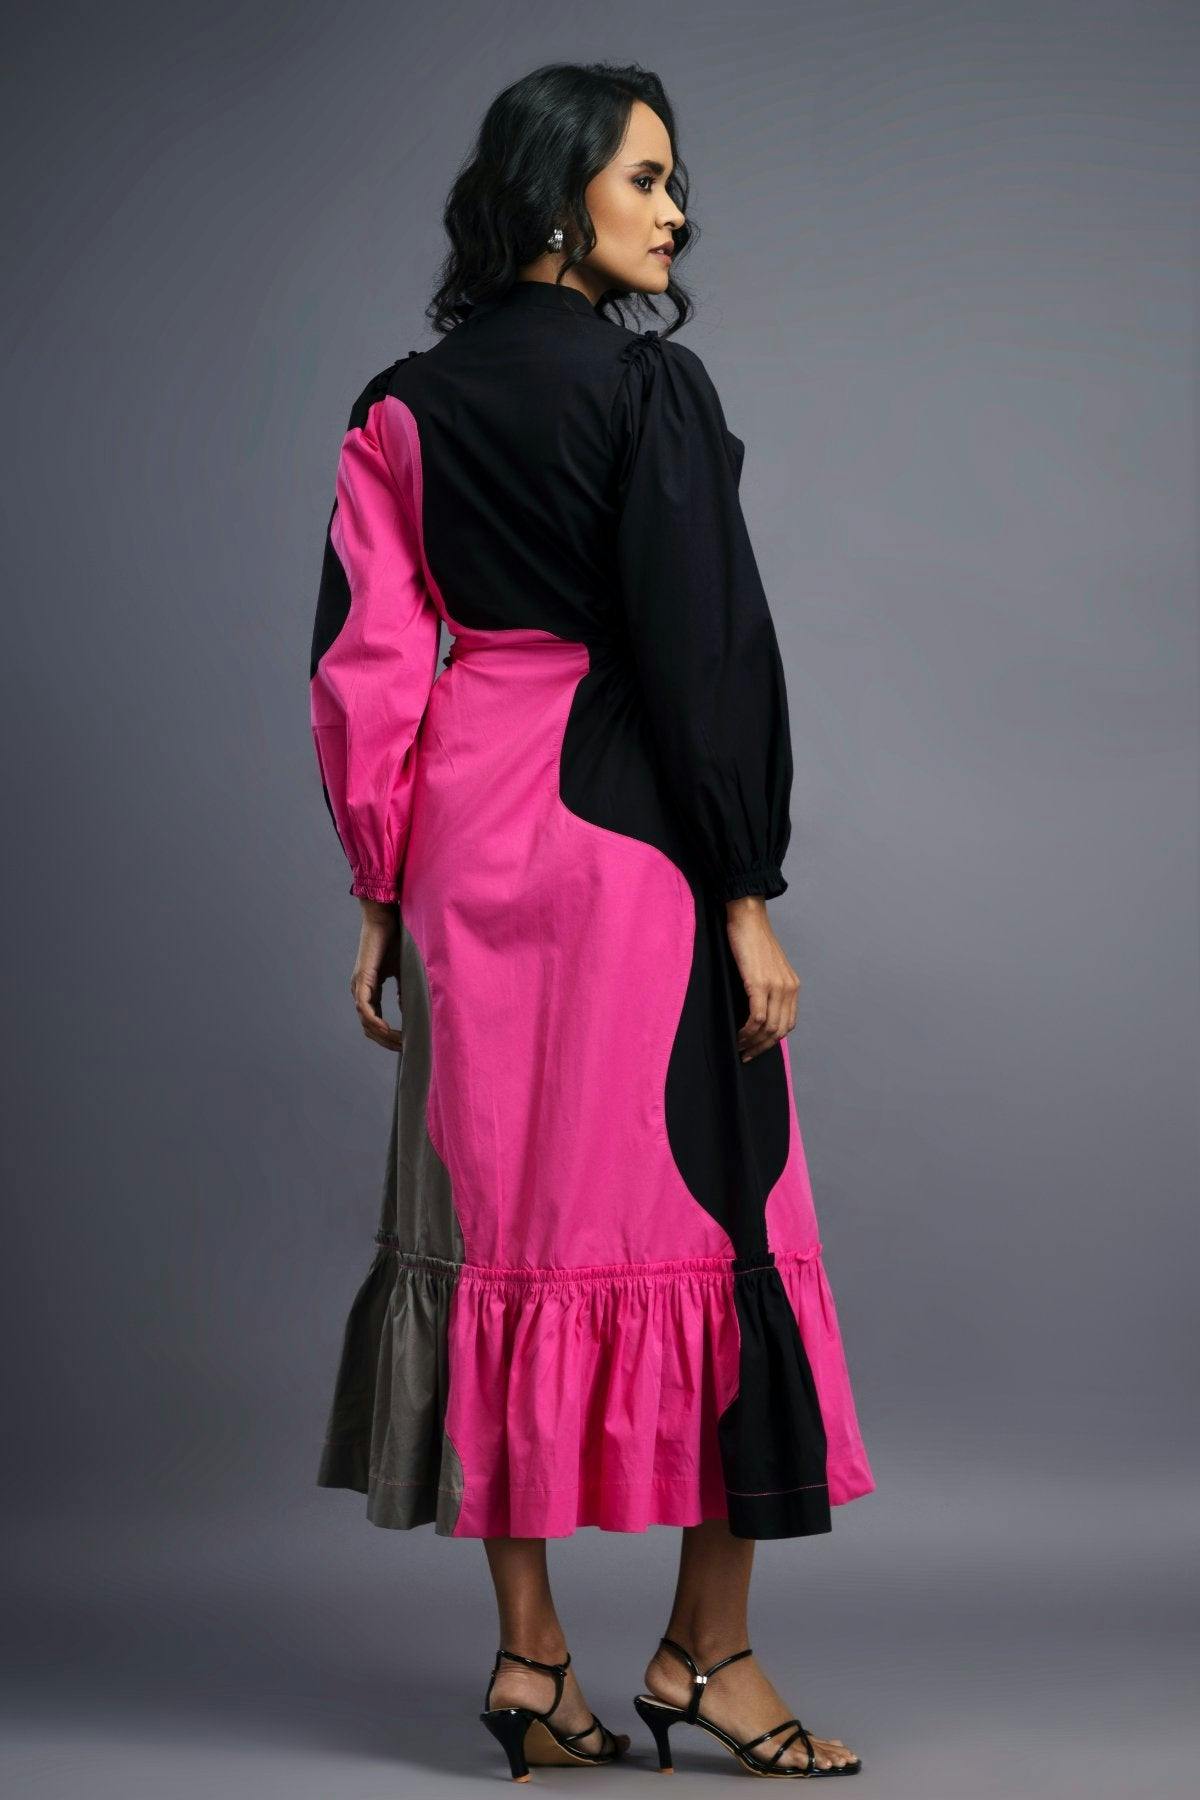 Thumbnail preview #3 for BB-1107-PG - Black Pink Maxi Shirt Dress